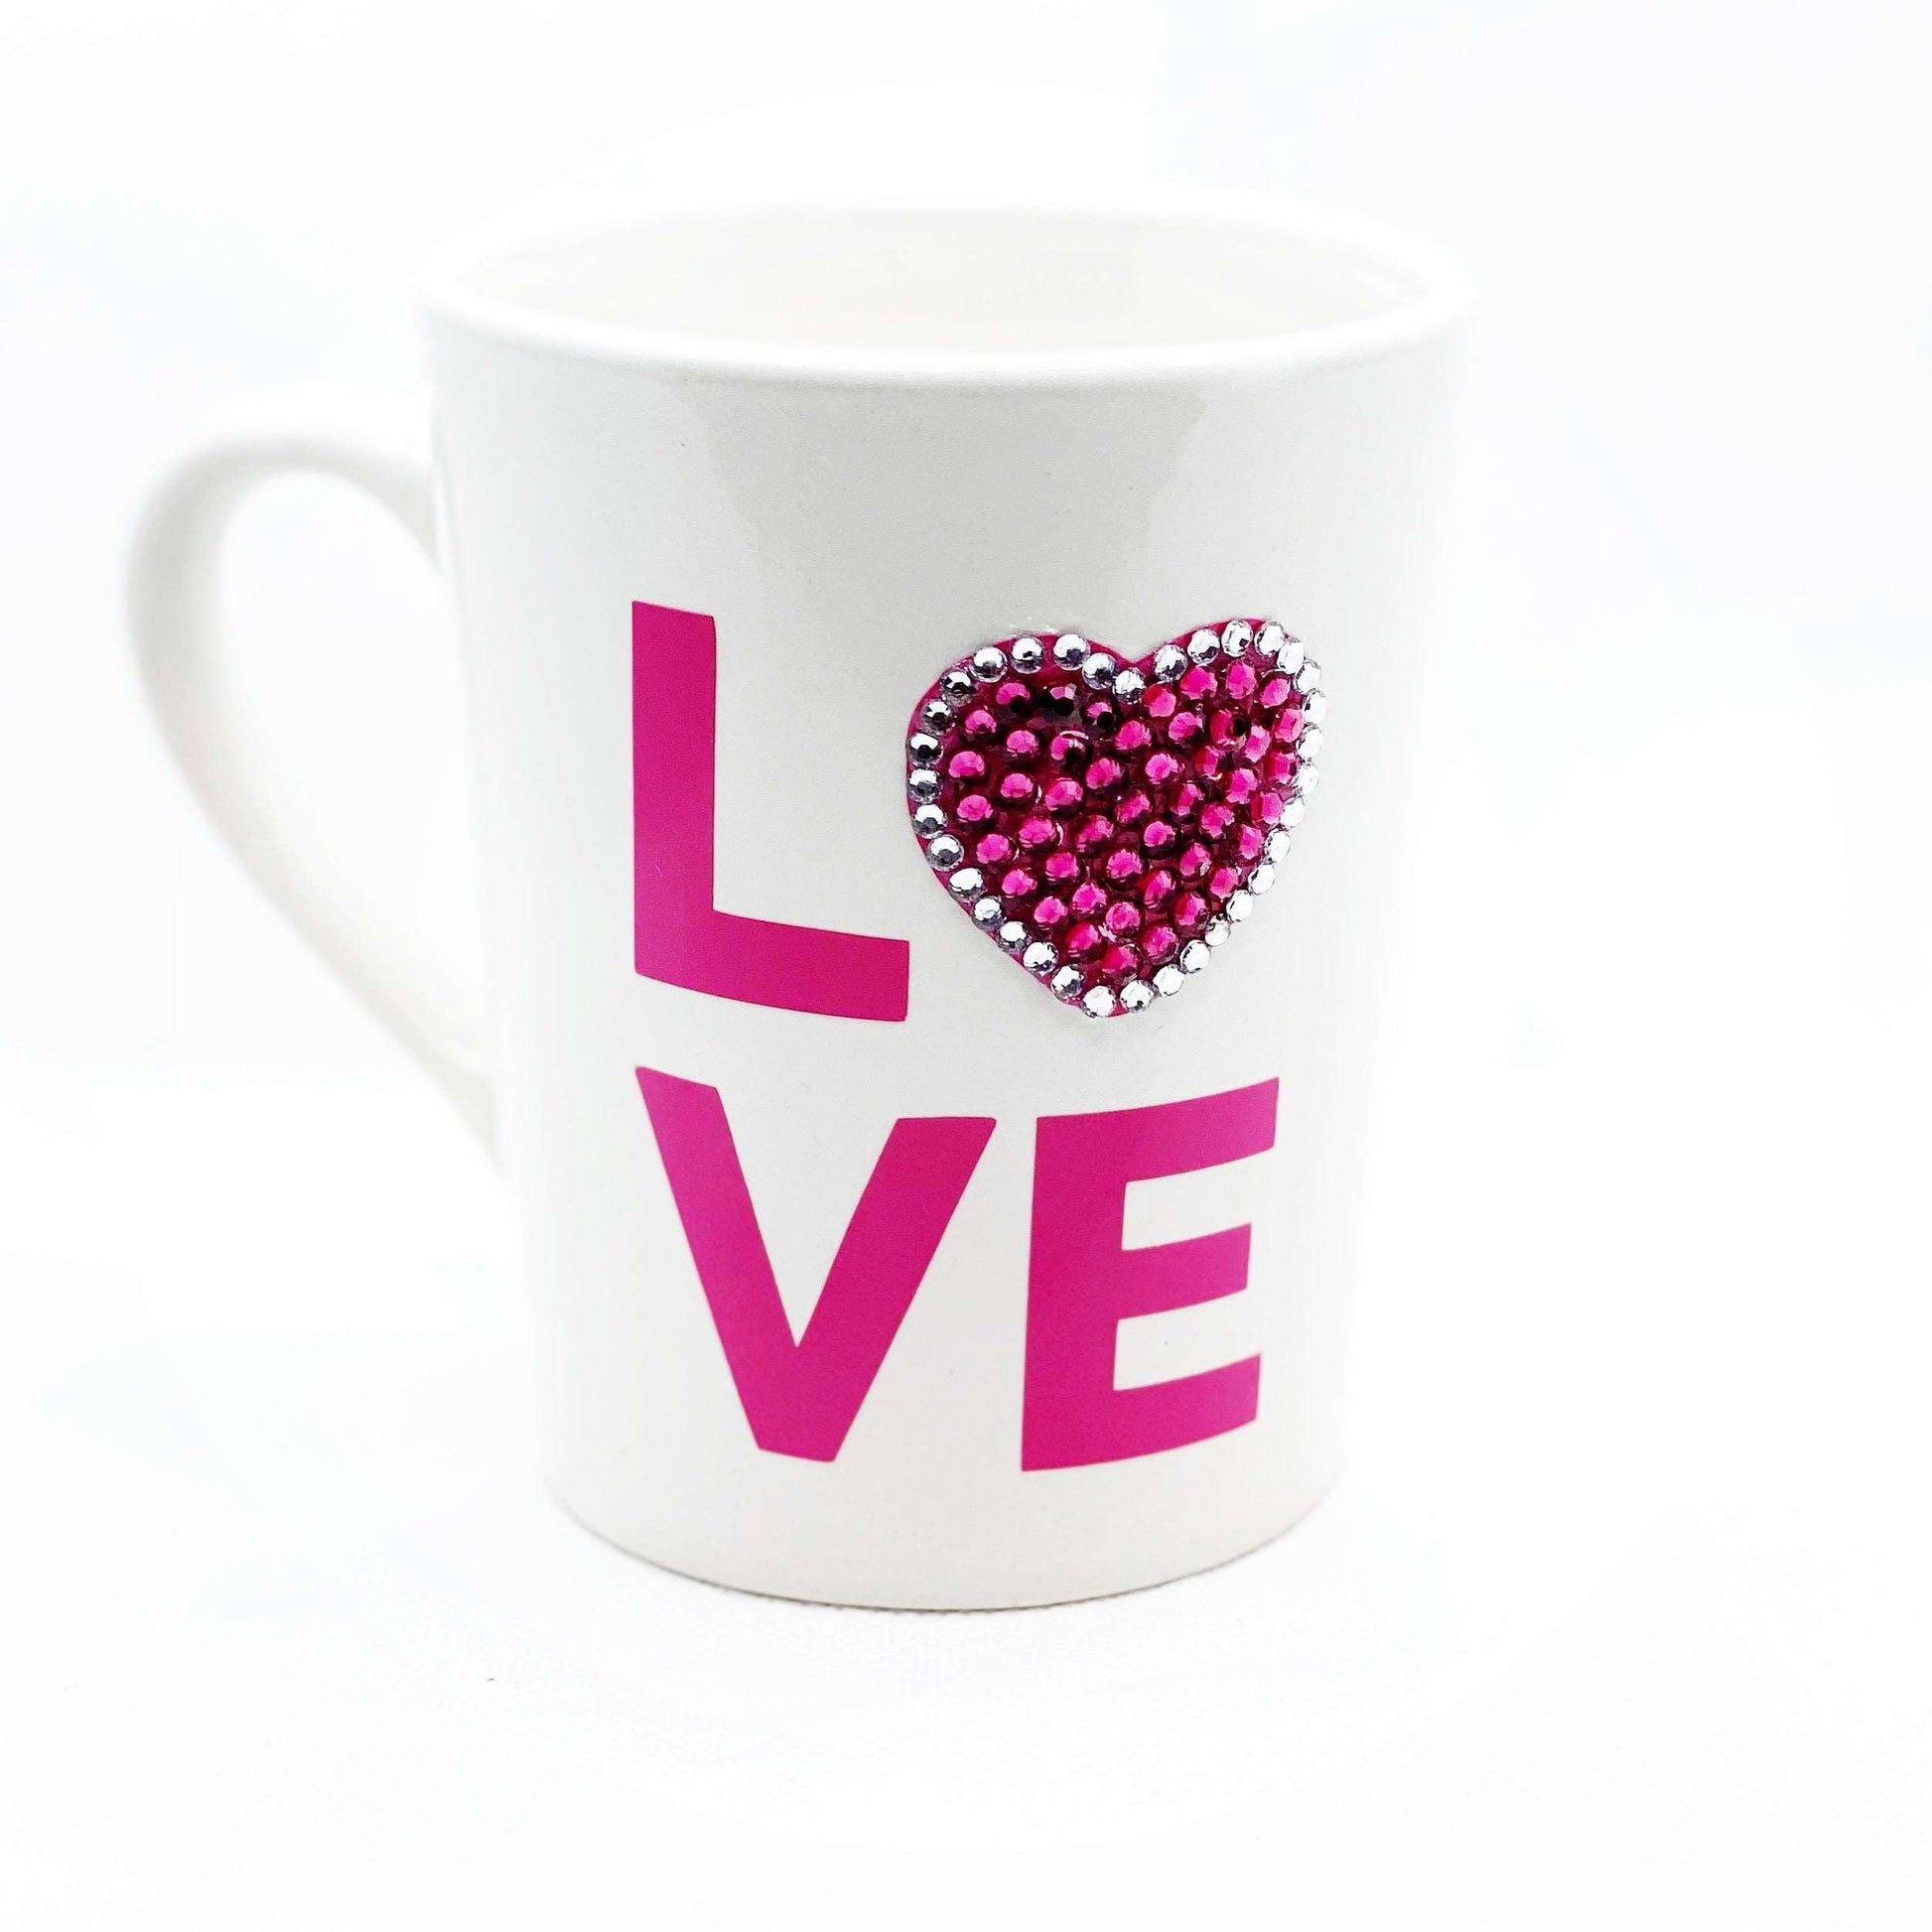 Love bling mug